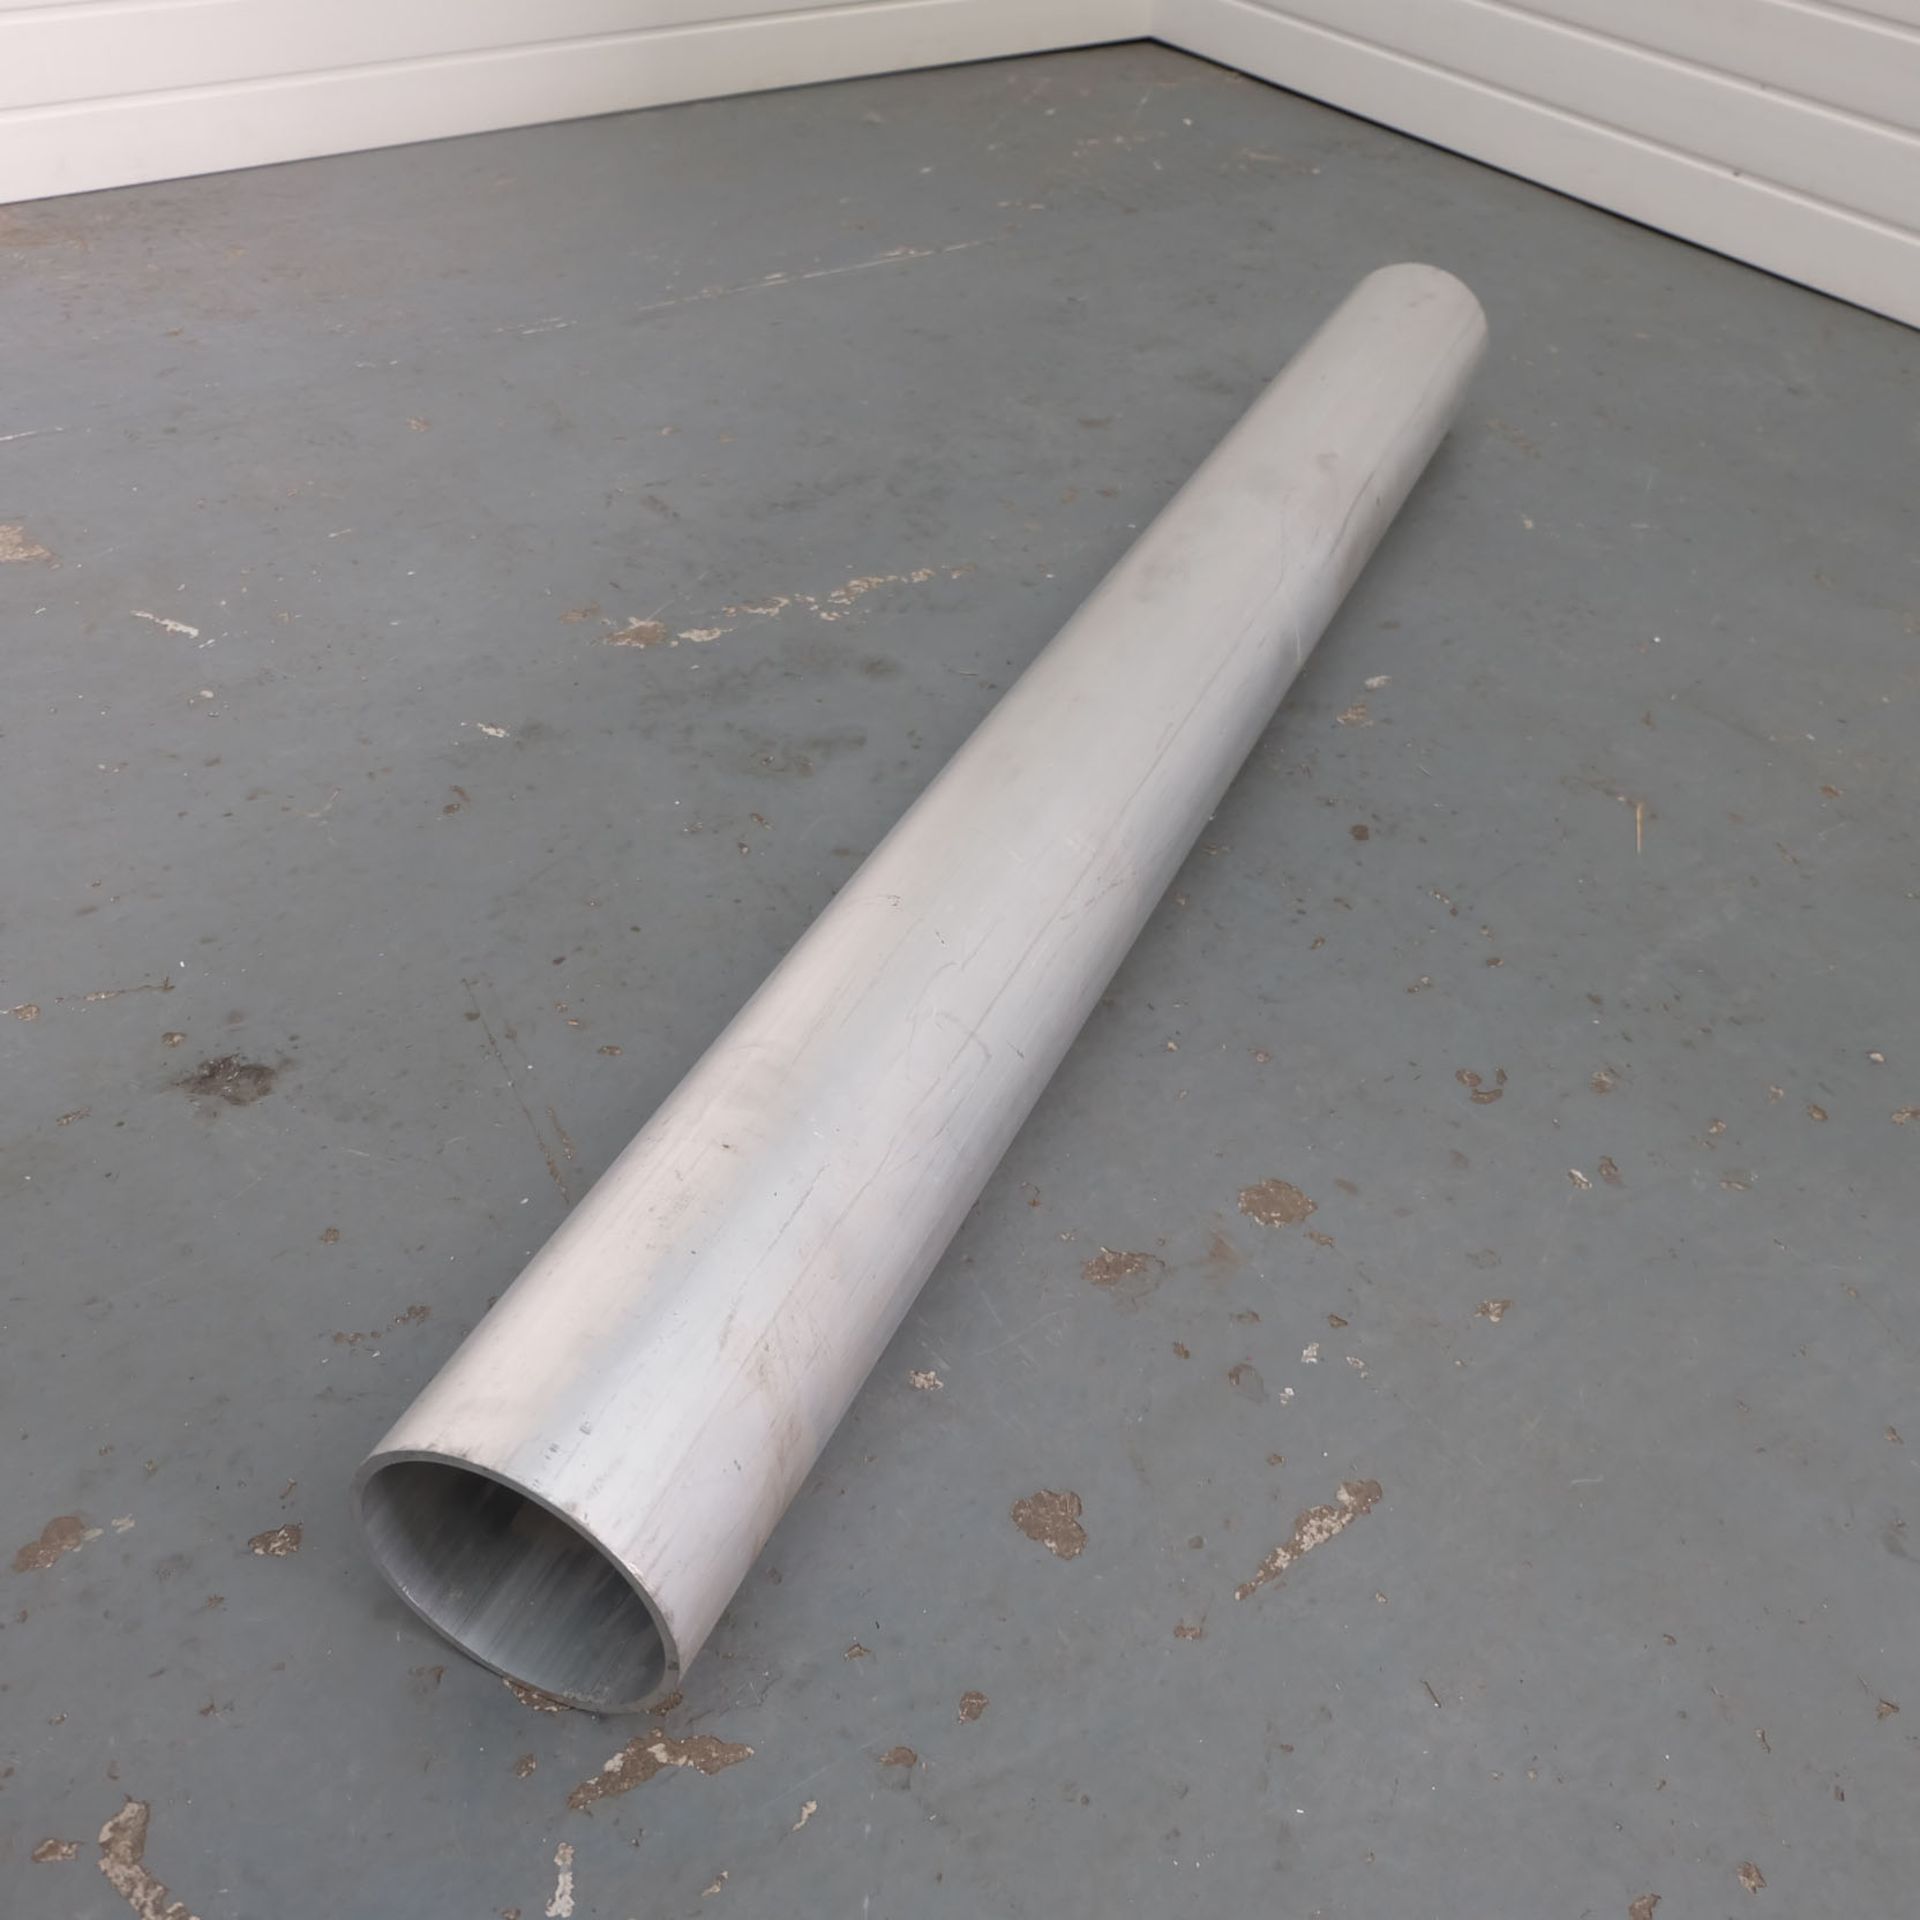 Aluminium Tube. 6" Diameter x 1/4" Thickness. Length 59 1/2".